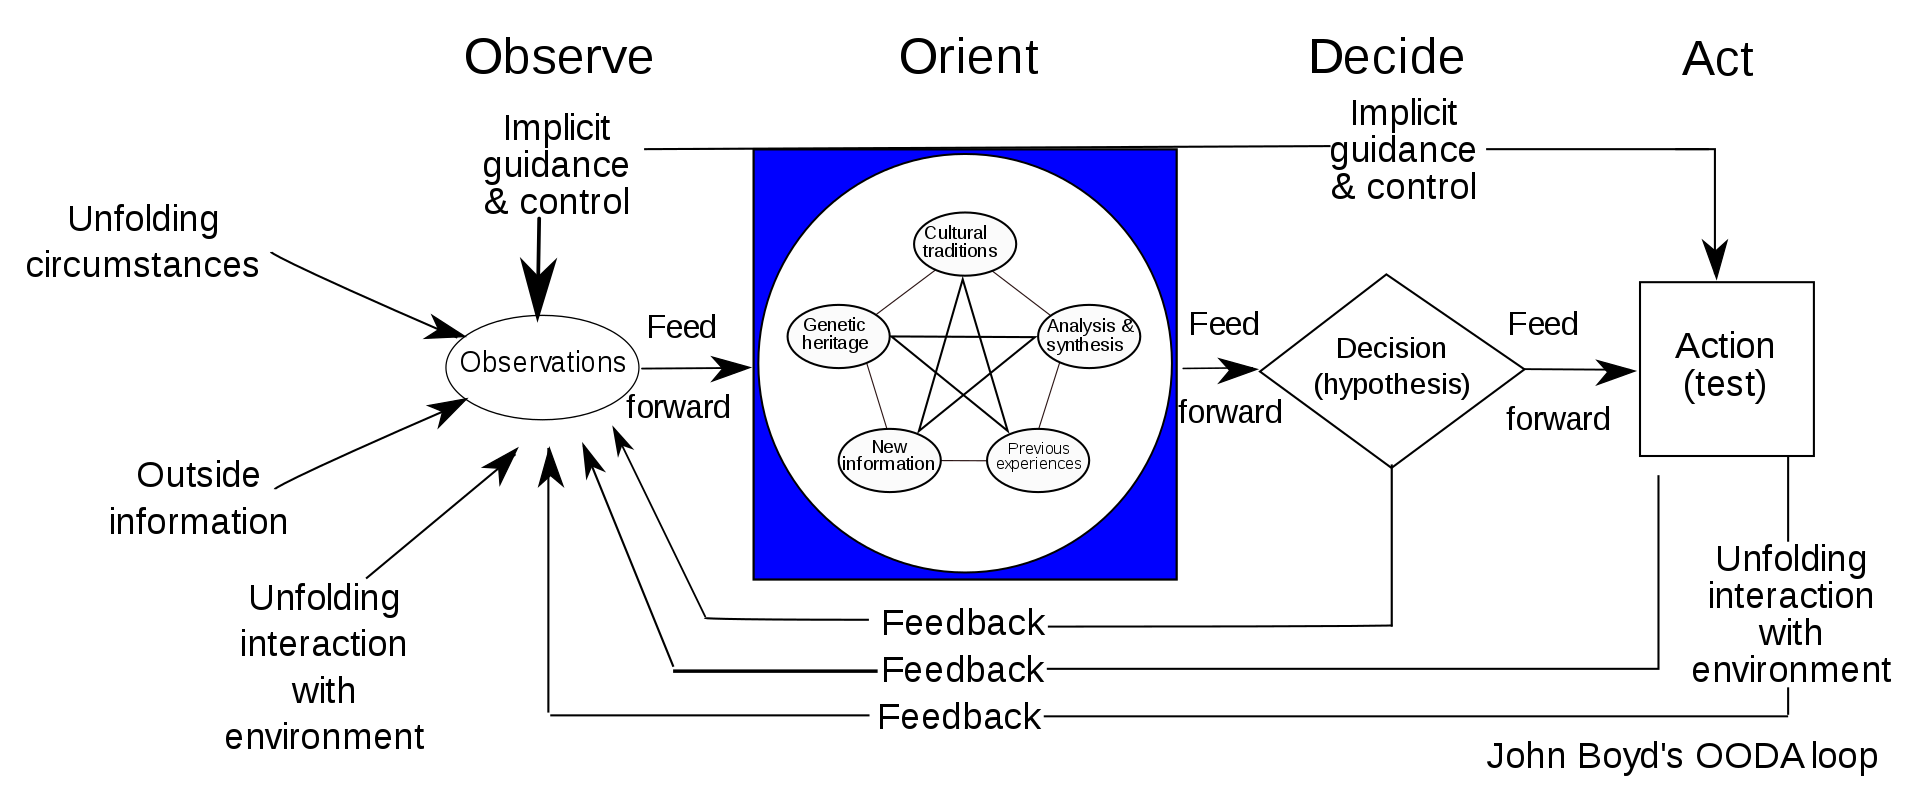 John Boyd's OODA diagram. Created by Patrick Edwin Moran under CC BY 3.0